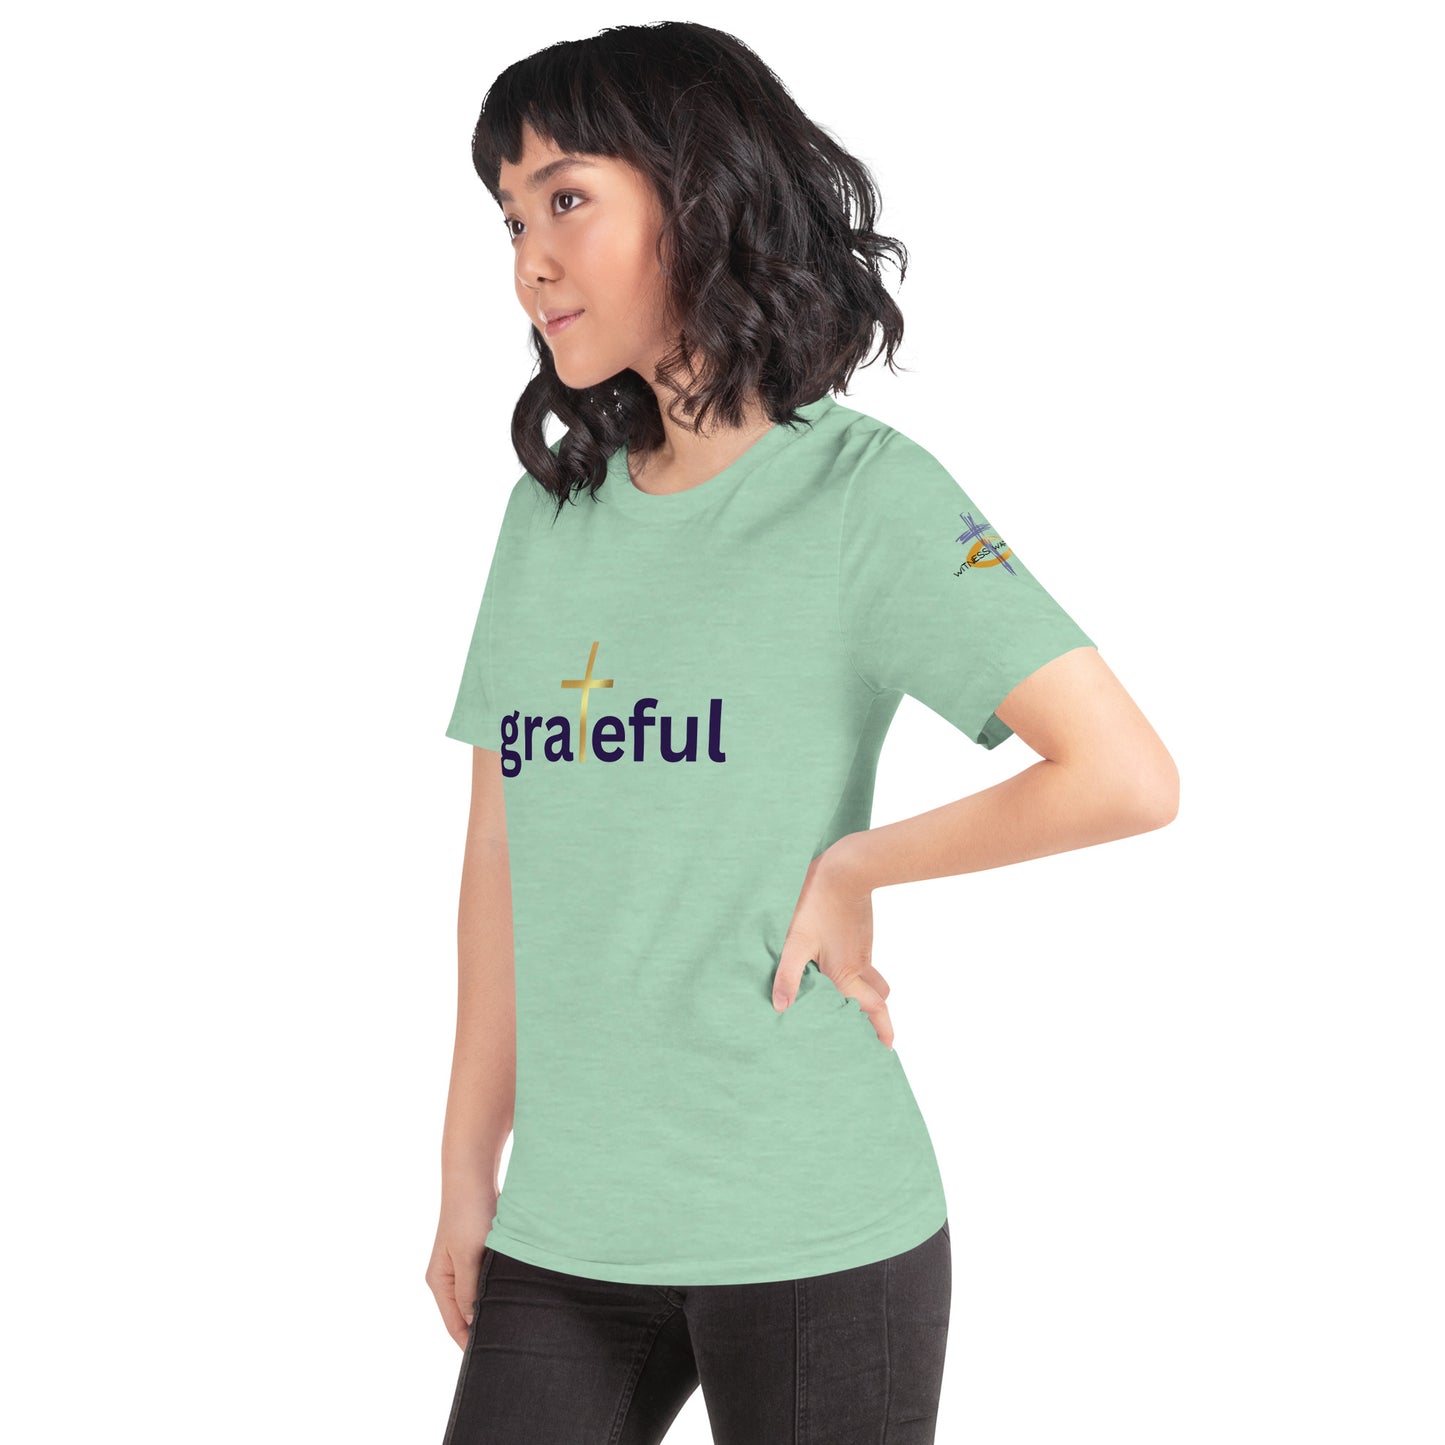 Grateful Unisex t-shirt